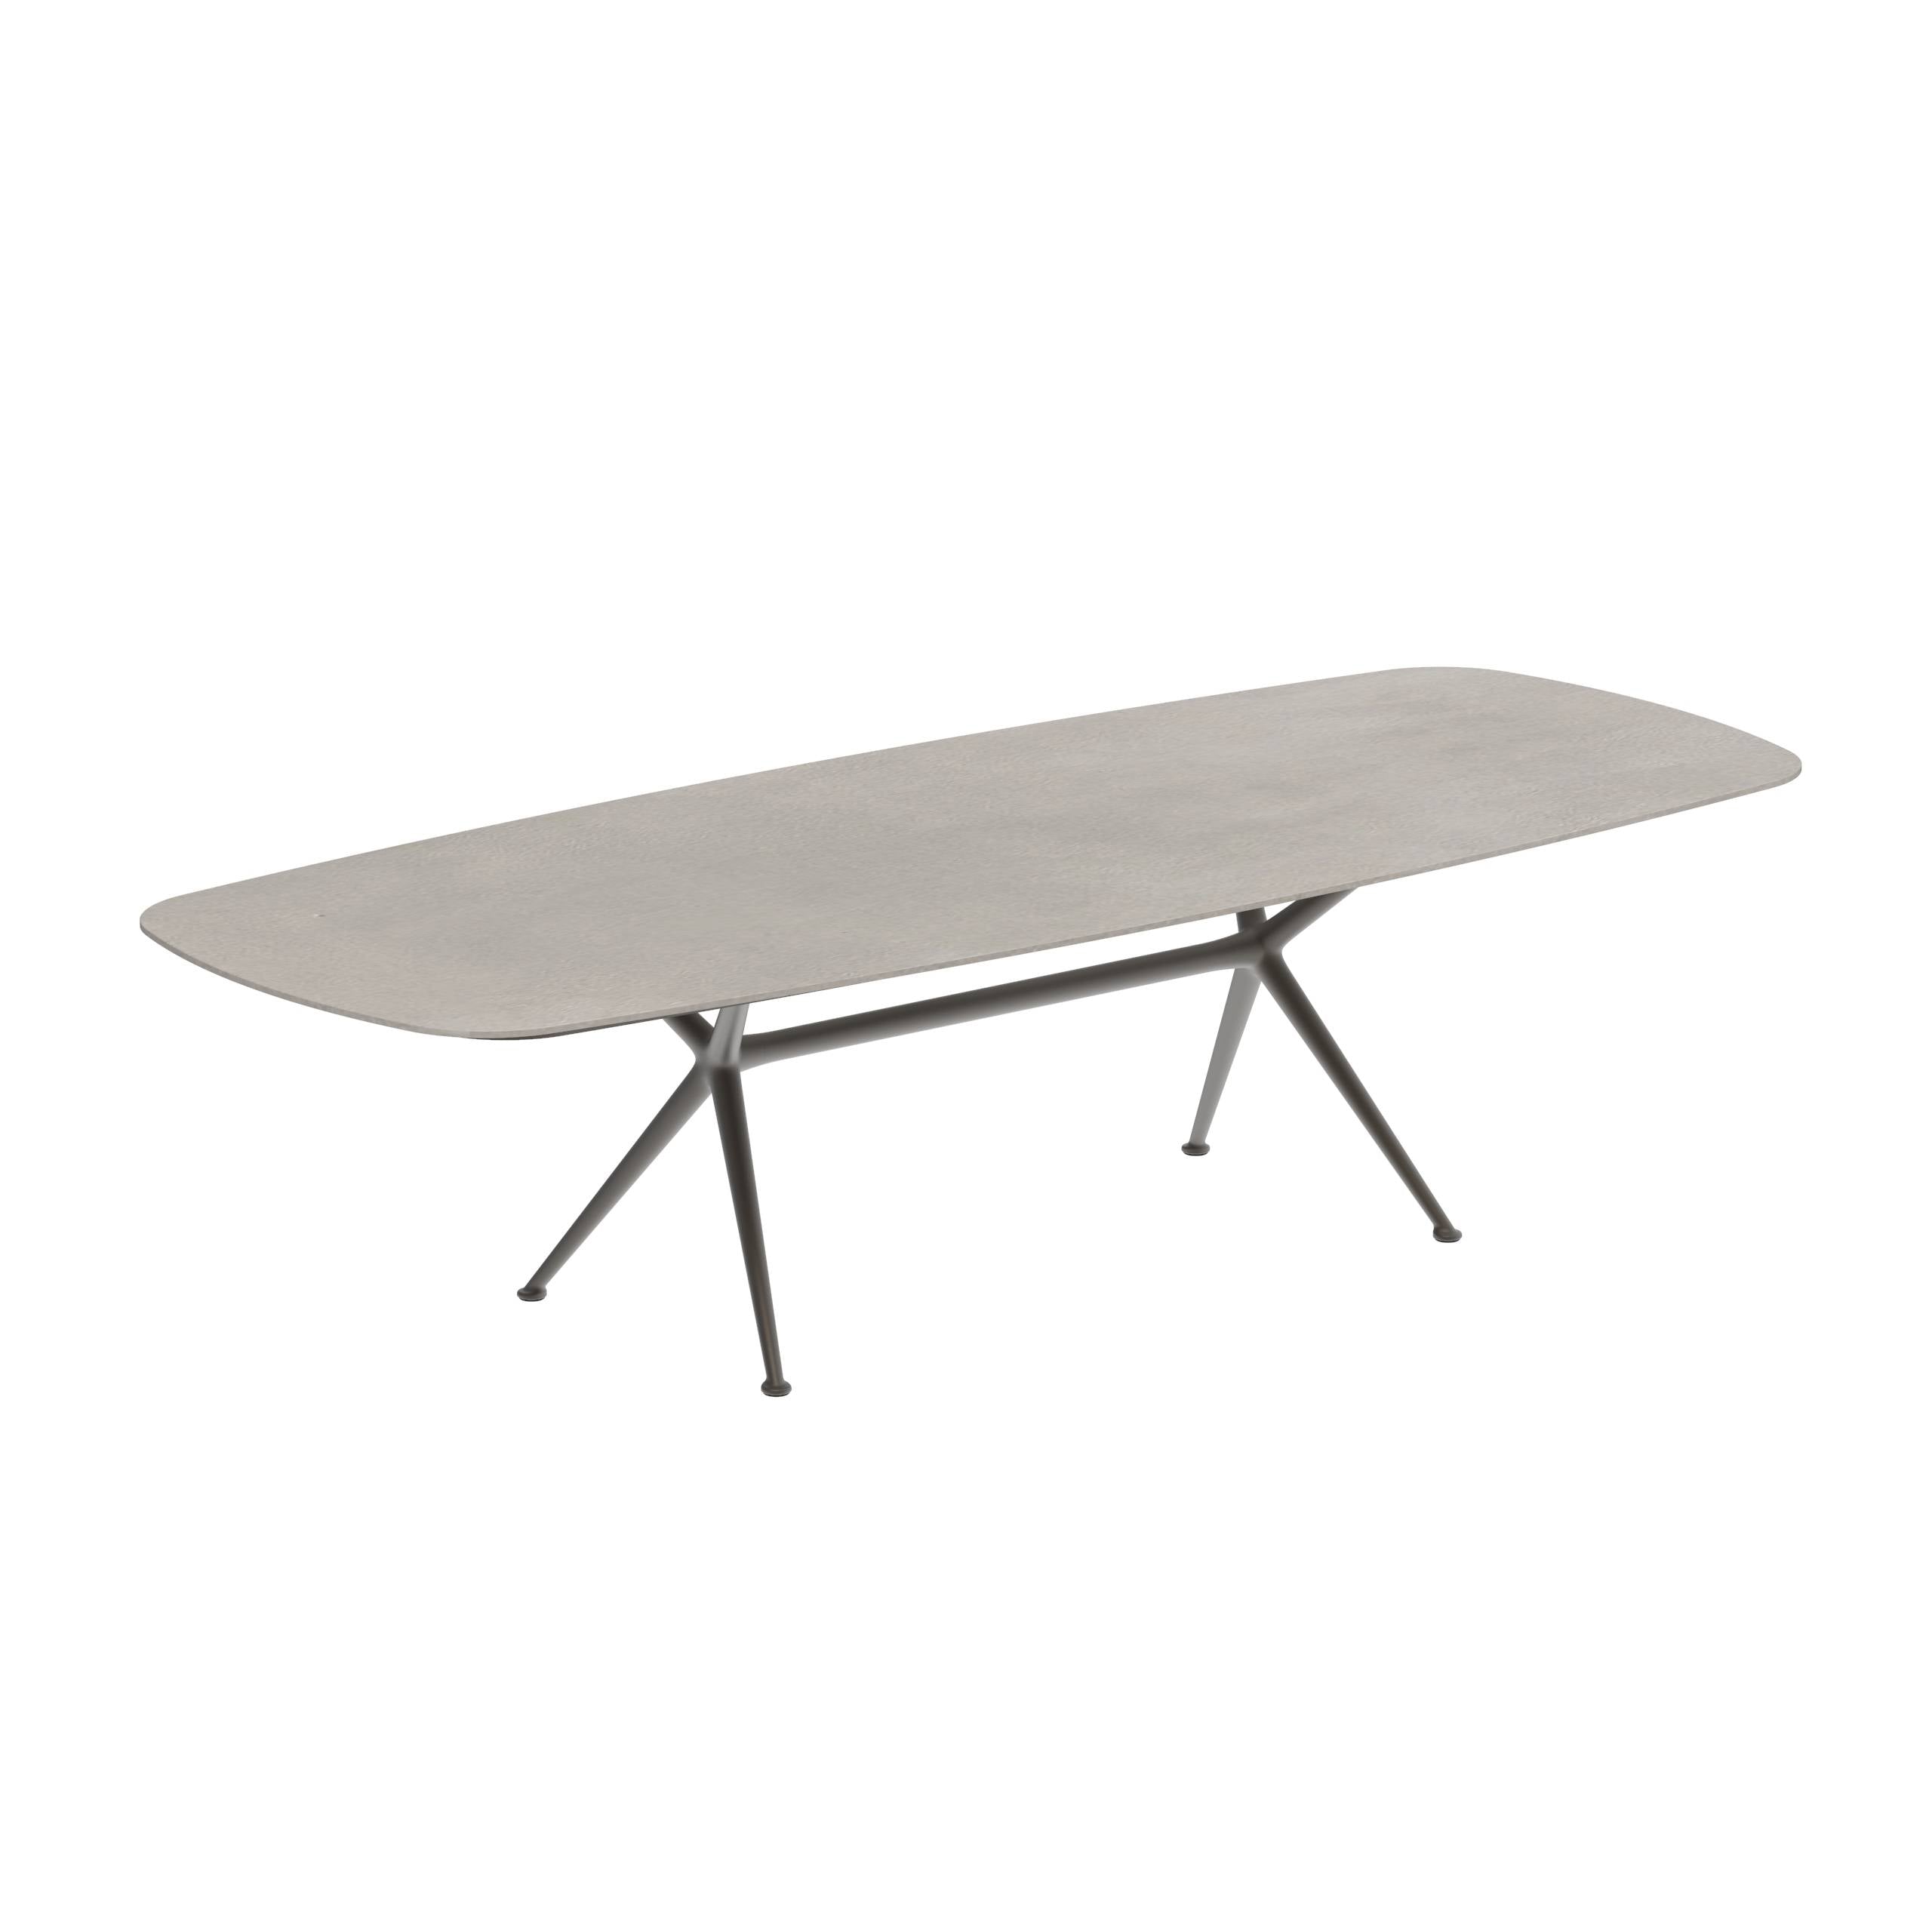 Exes Table 300x120cm Alu Legs Bronze - Table Top Ceramic Cemento Luminoso